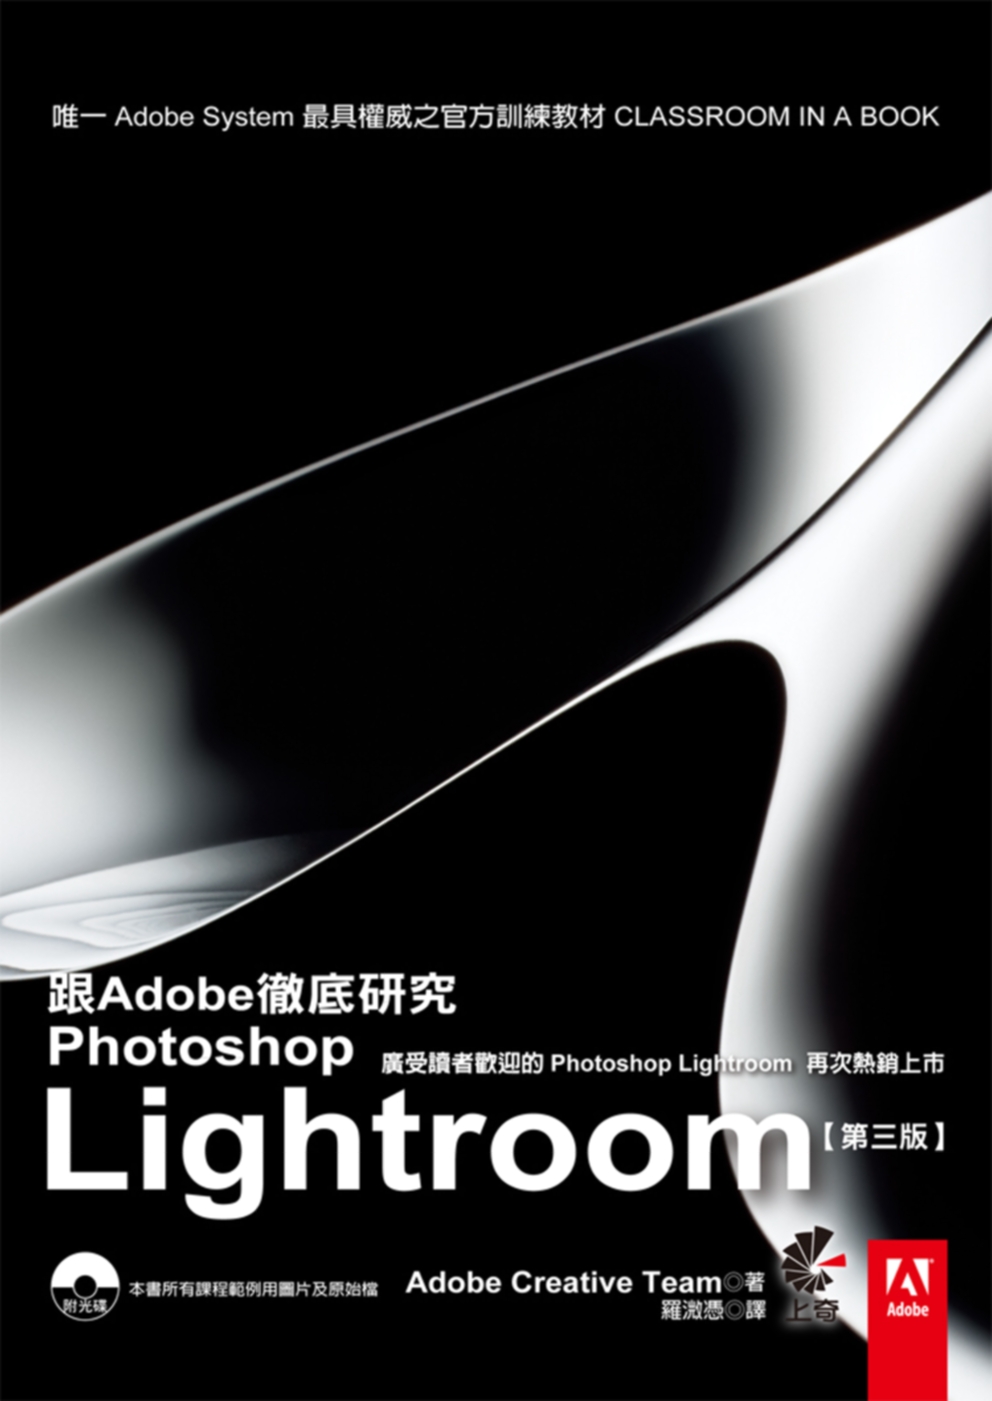 跟Adobe徹底研究Photoshop Lightroom(...